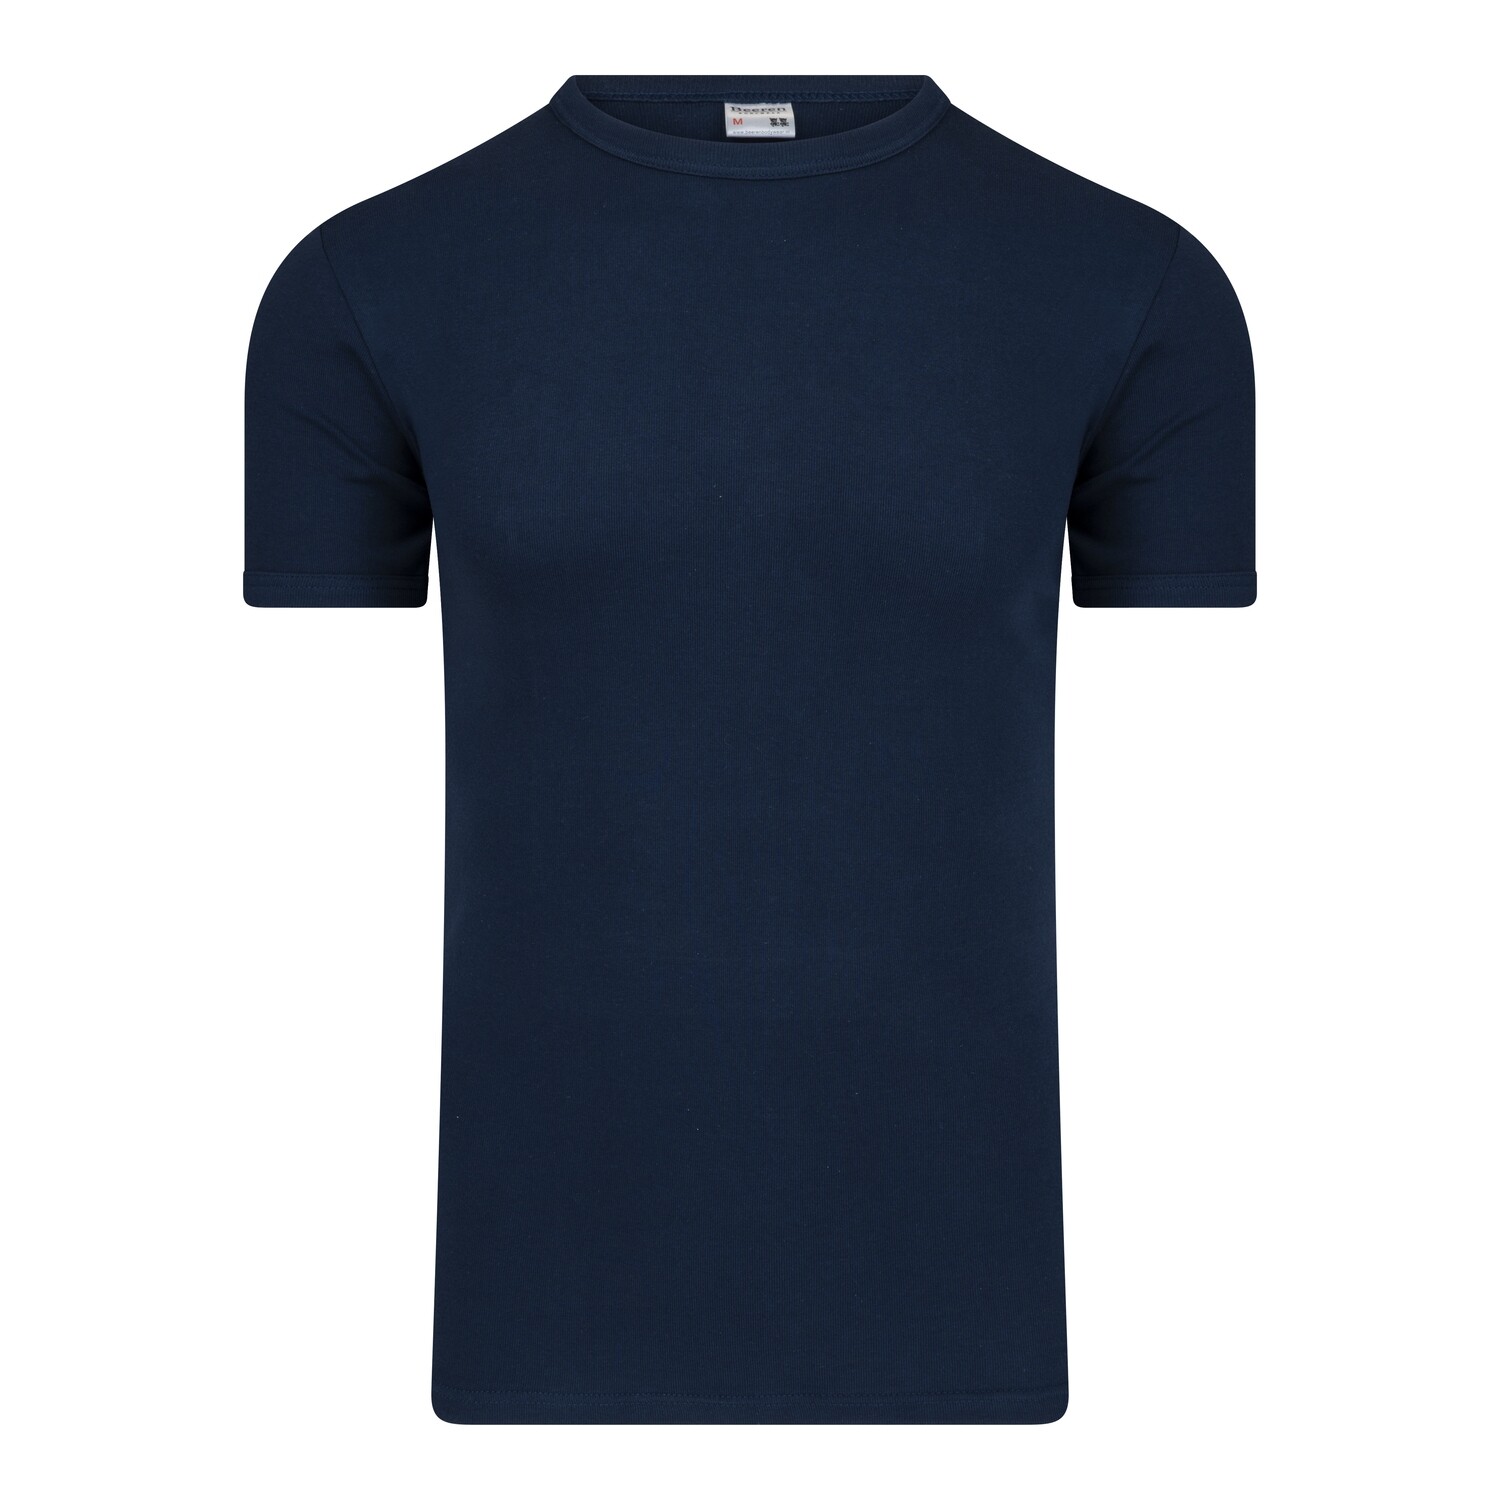 (11-537) Heren T-shirt R-hals M3000 extra lang marine XXL, Size: XXL, Color: marine